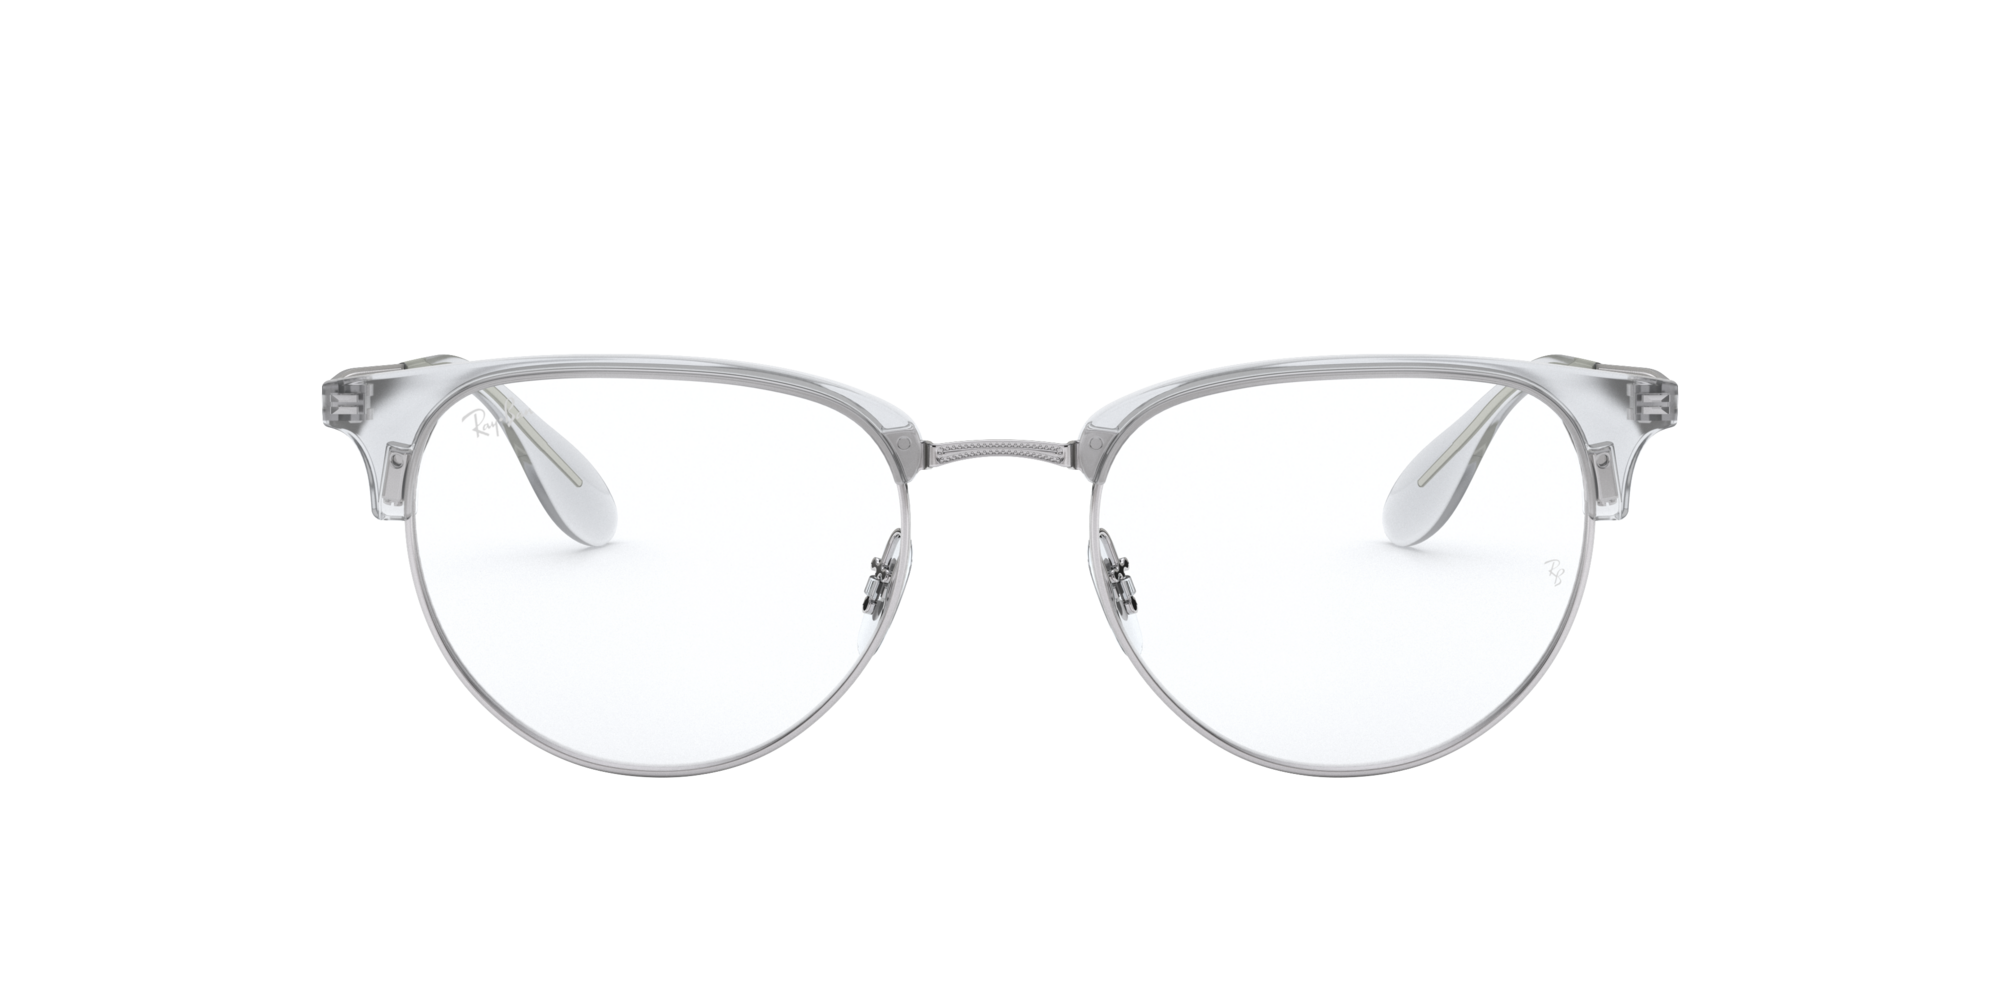 Ray Ban 0rx6396 Glasses In Silver Gunmetal Grey Target Optical